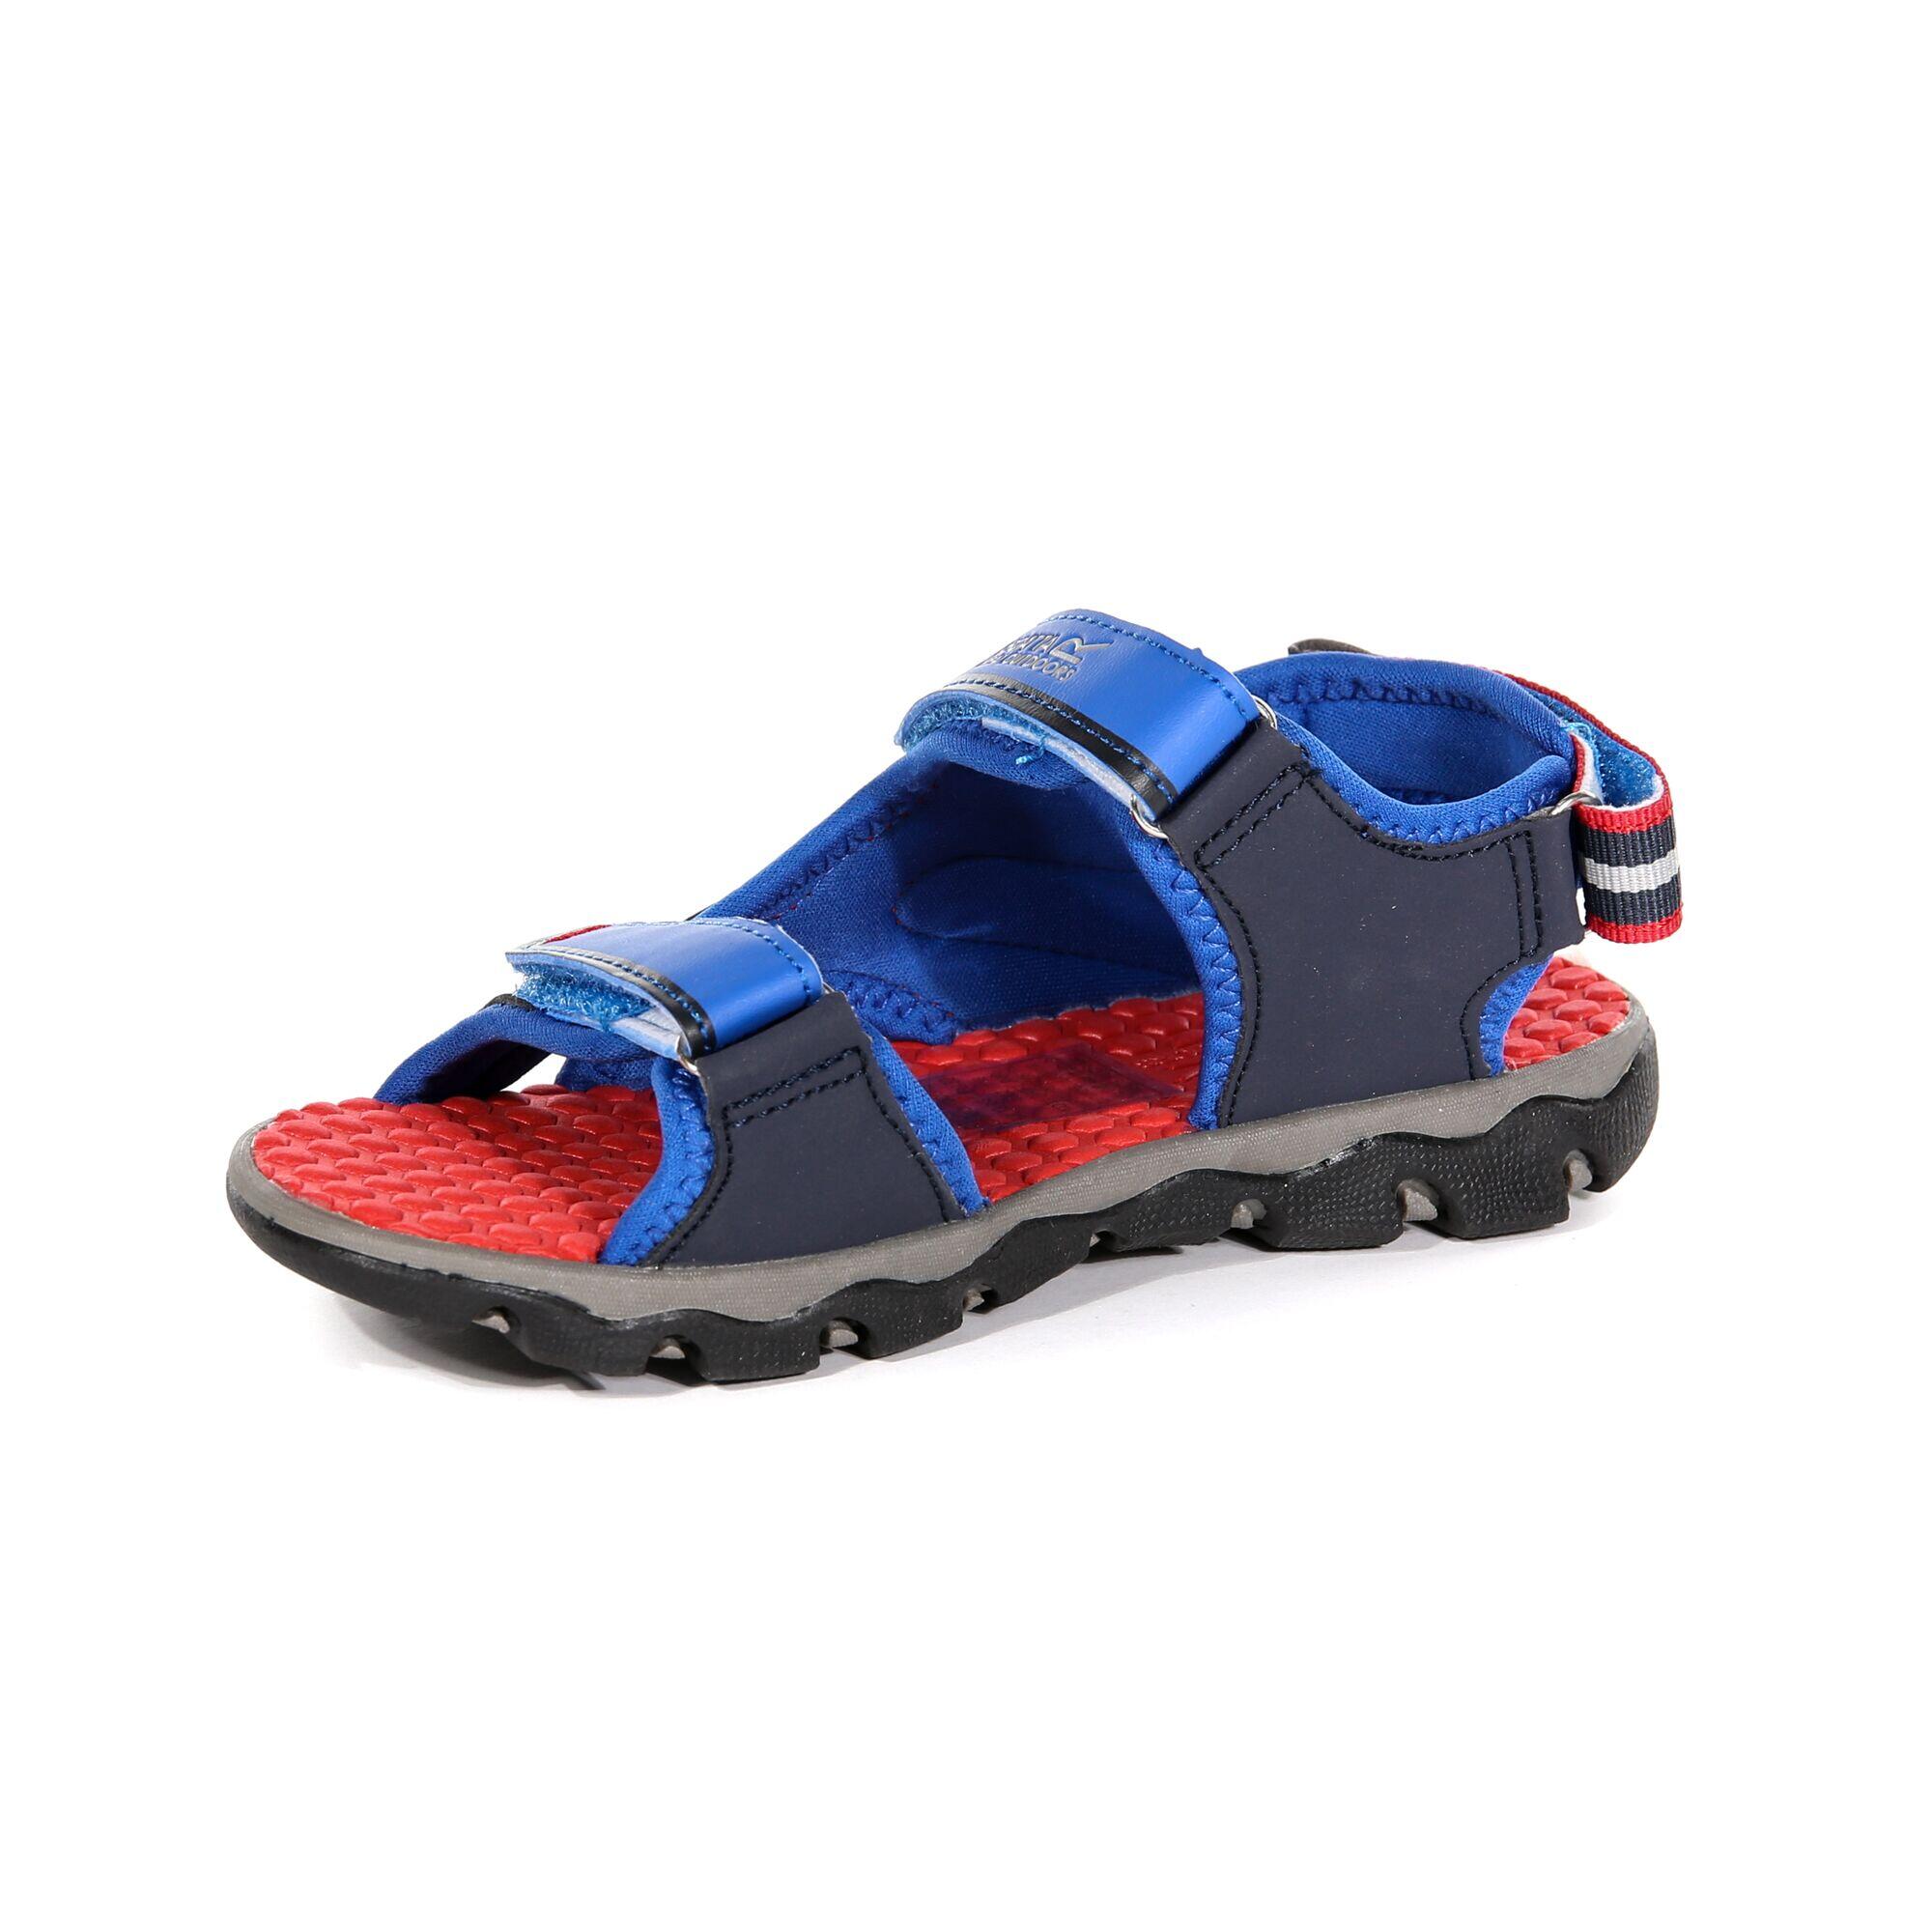 Kota Drift Junior Kids Walking Sandals - Oxford Blue Pepper 4/5